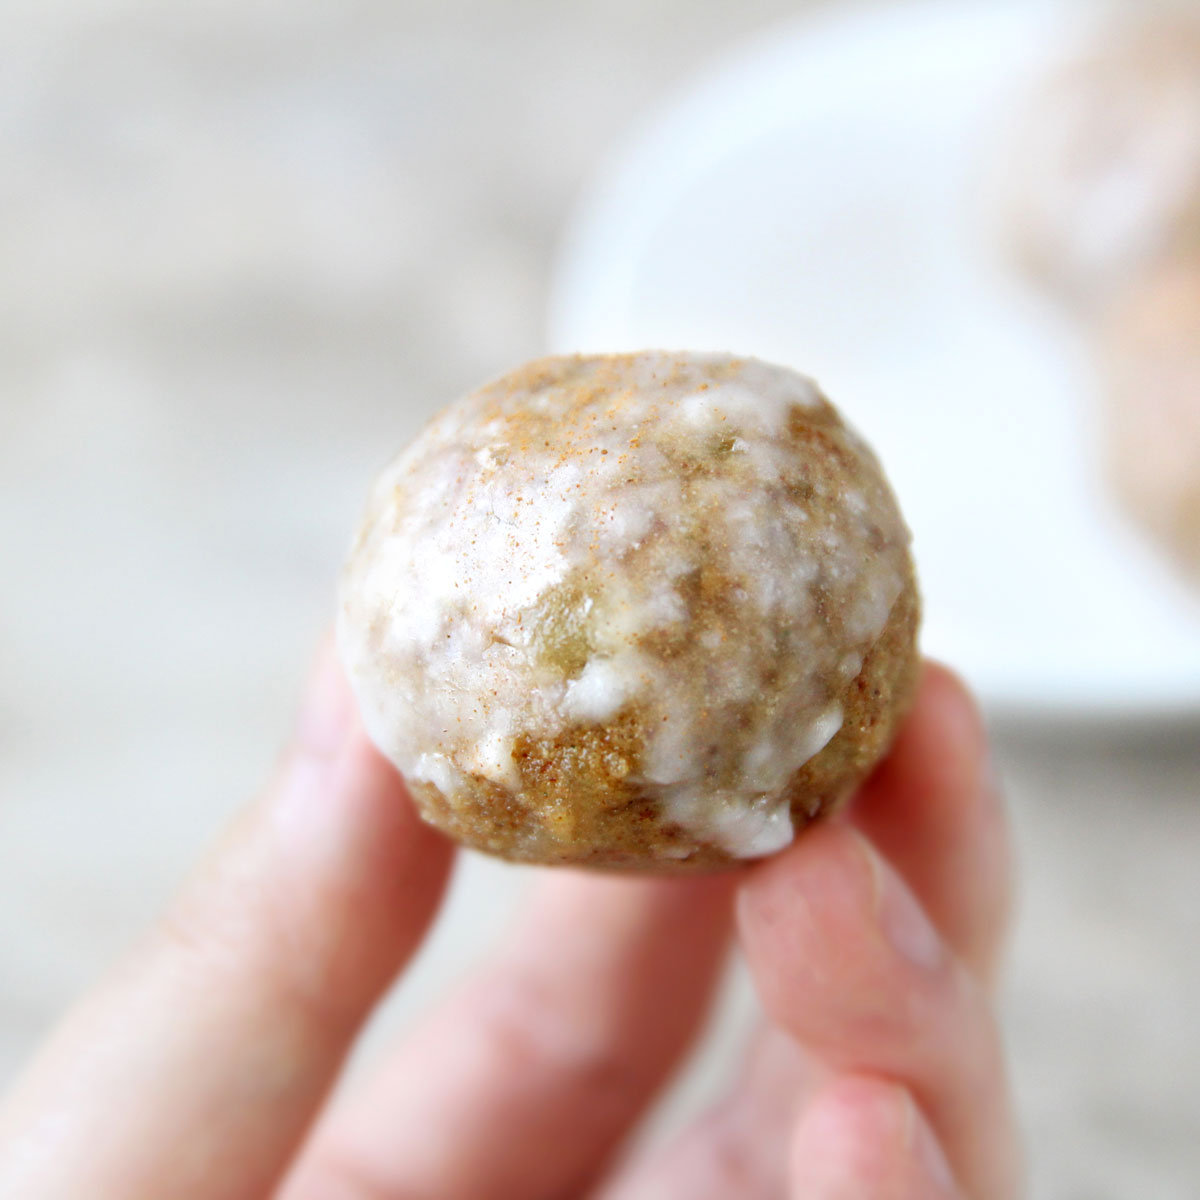 5 Ingredient "Ferrero Rocher" Protein Balls (Healthy, Easy & Vegan) - protein balls